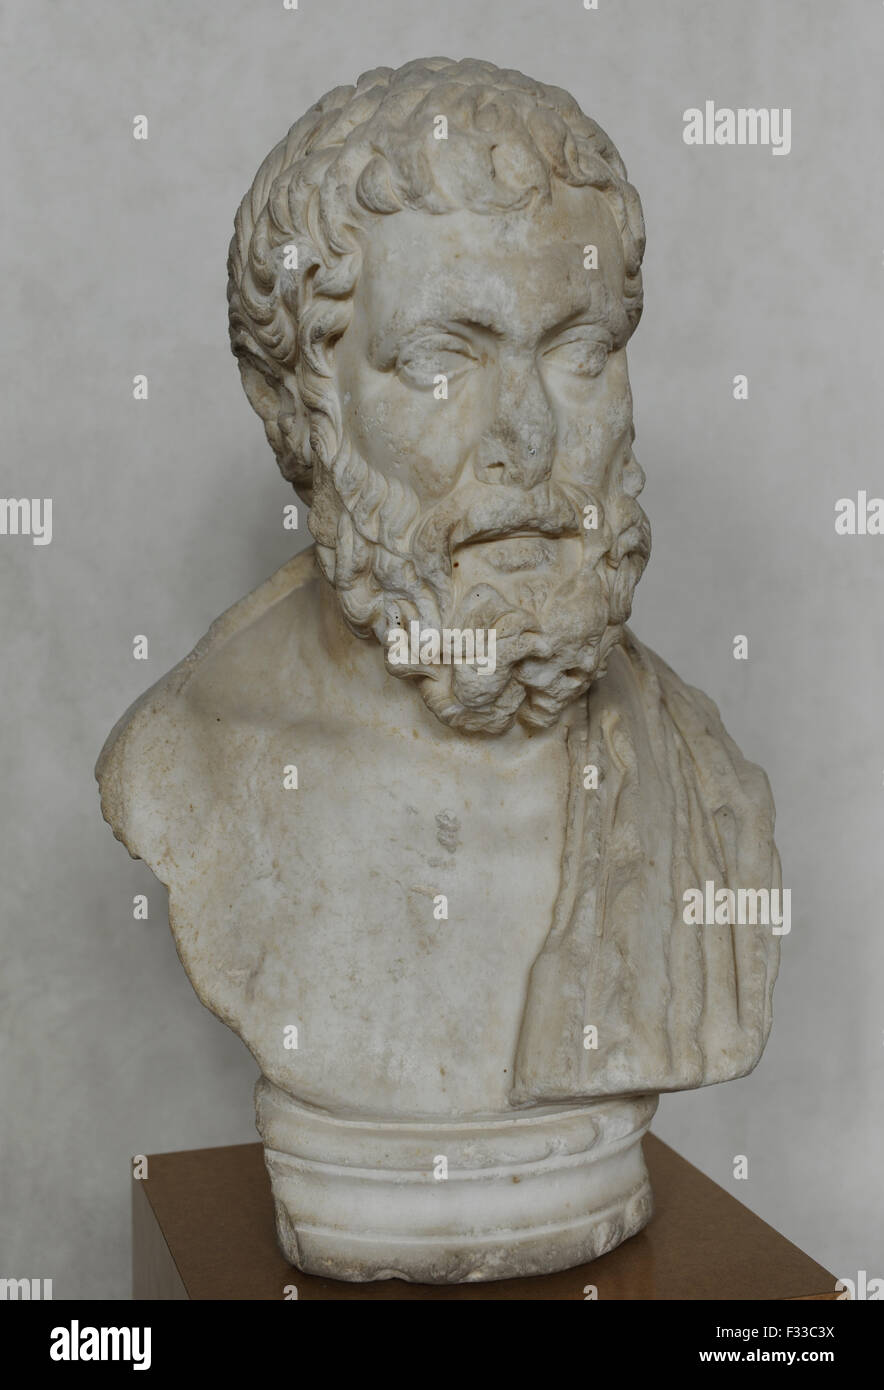 Philosopher. Bust. Marble. Samaria. Roman period, 1st century AD. Epicurean school. Rockefeller Archaeological Museum. Jerusalem. Israel. Roman copy. Stock Photo